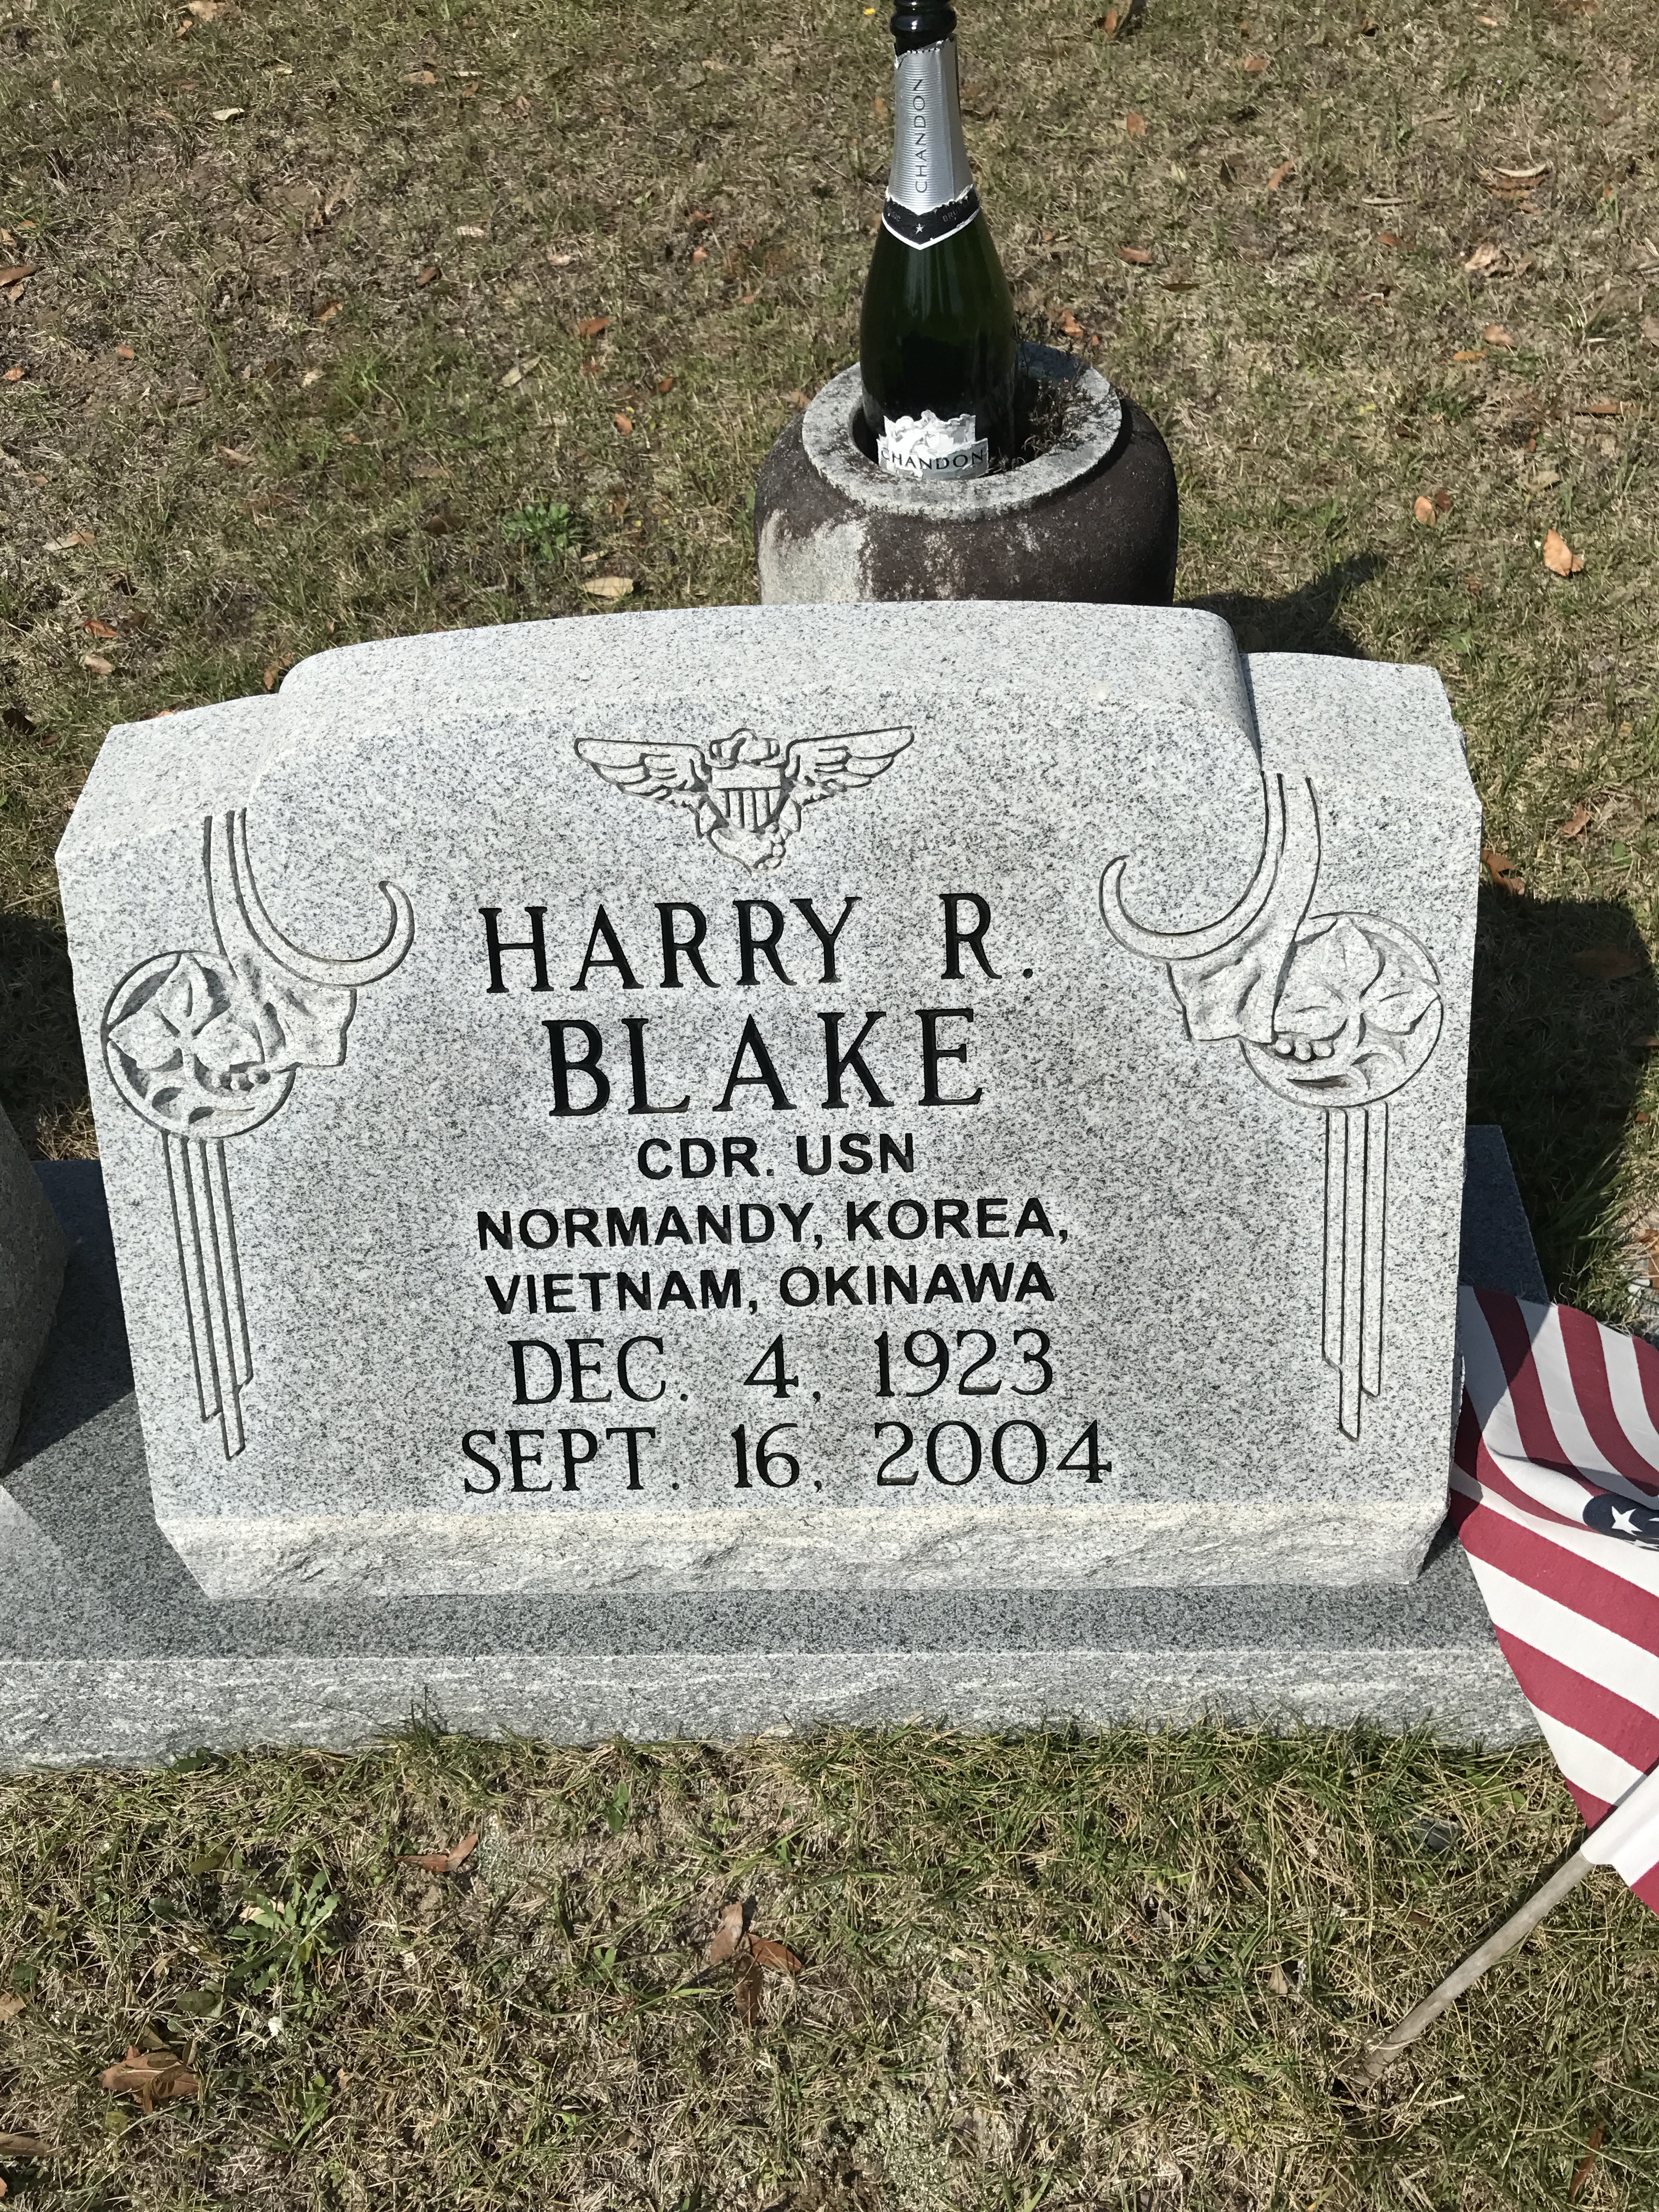 Harry R. Jr. Blake